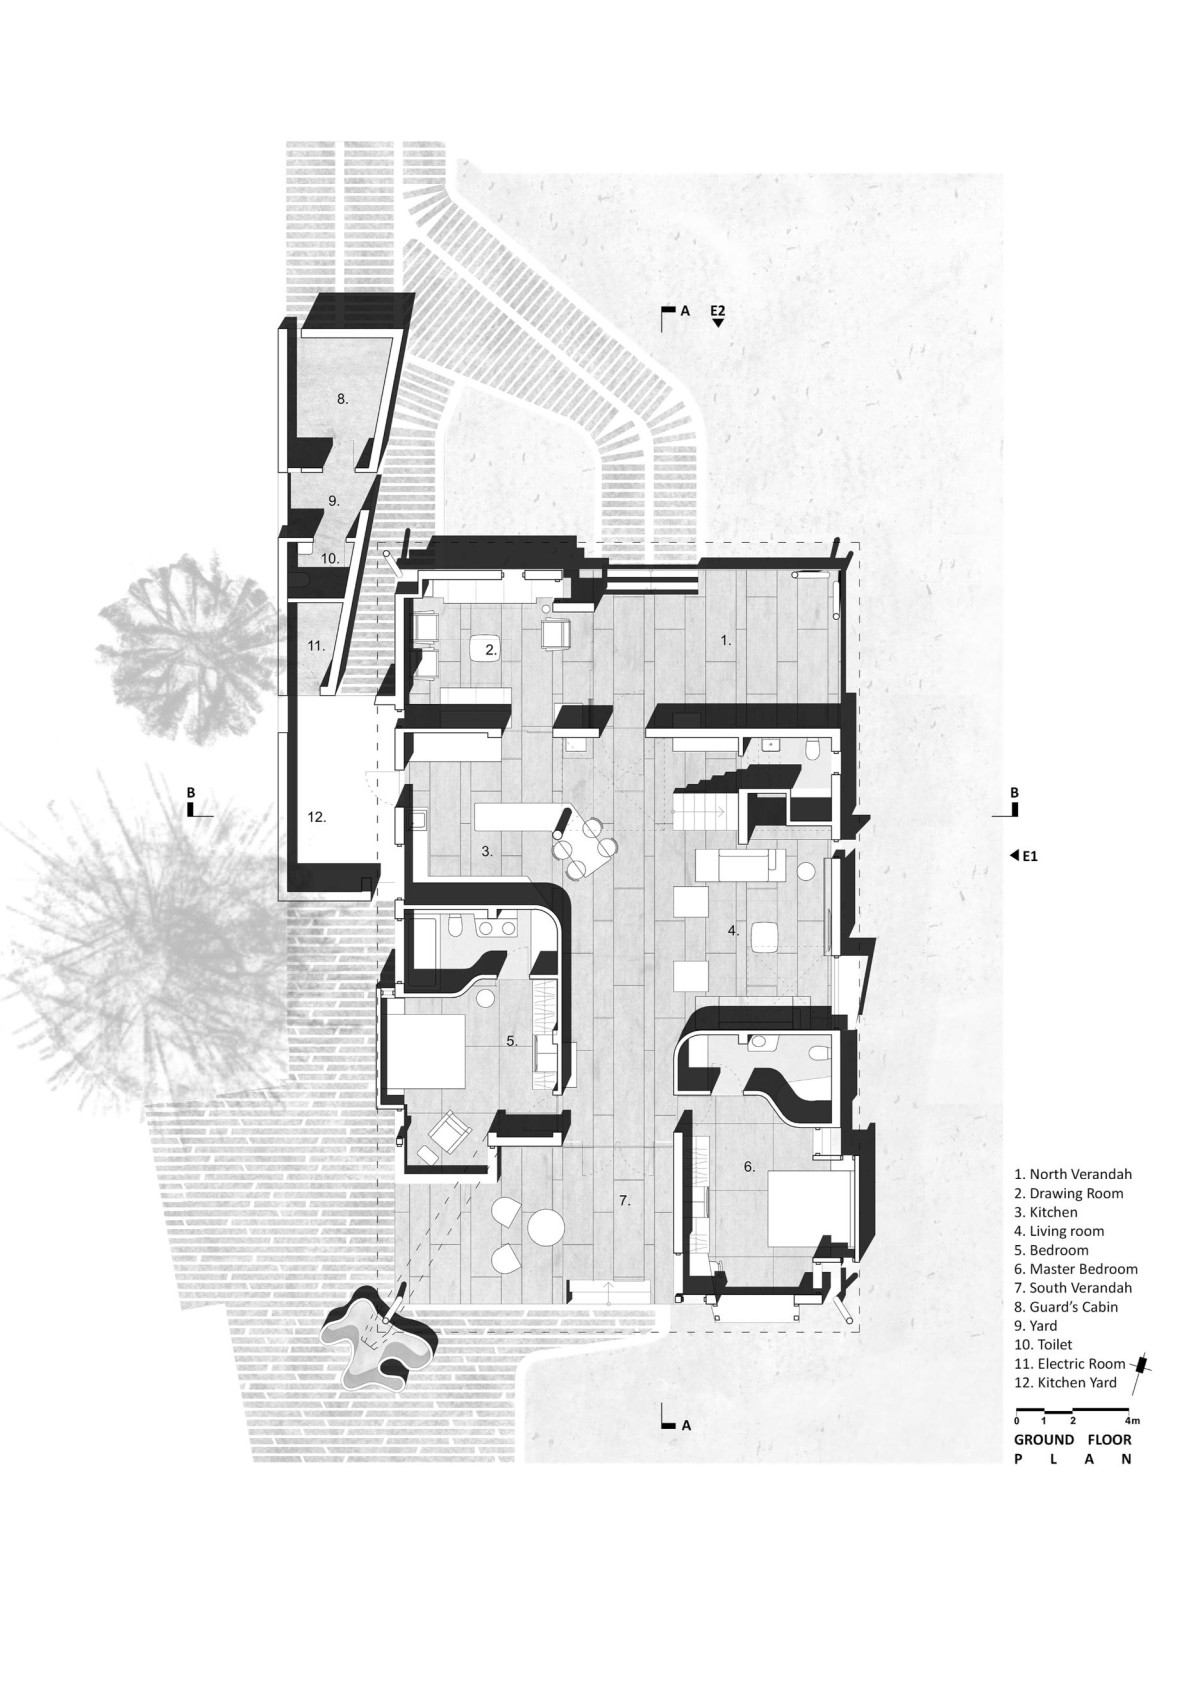 Ground floor plan of House at Gulmohar Greens by Studio 4000